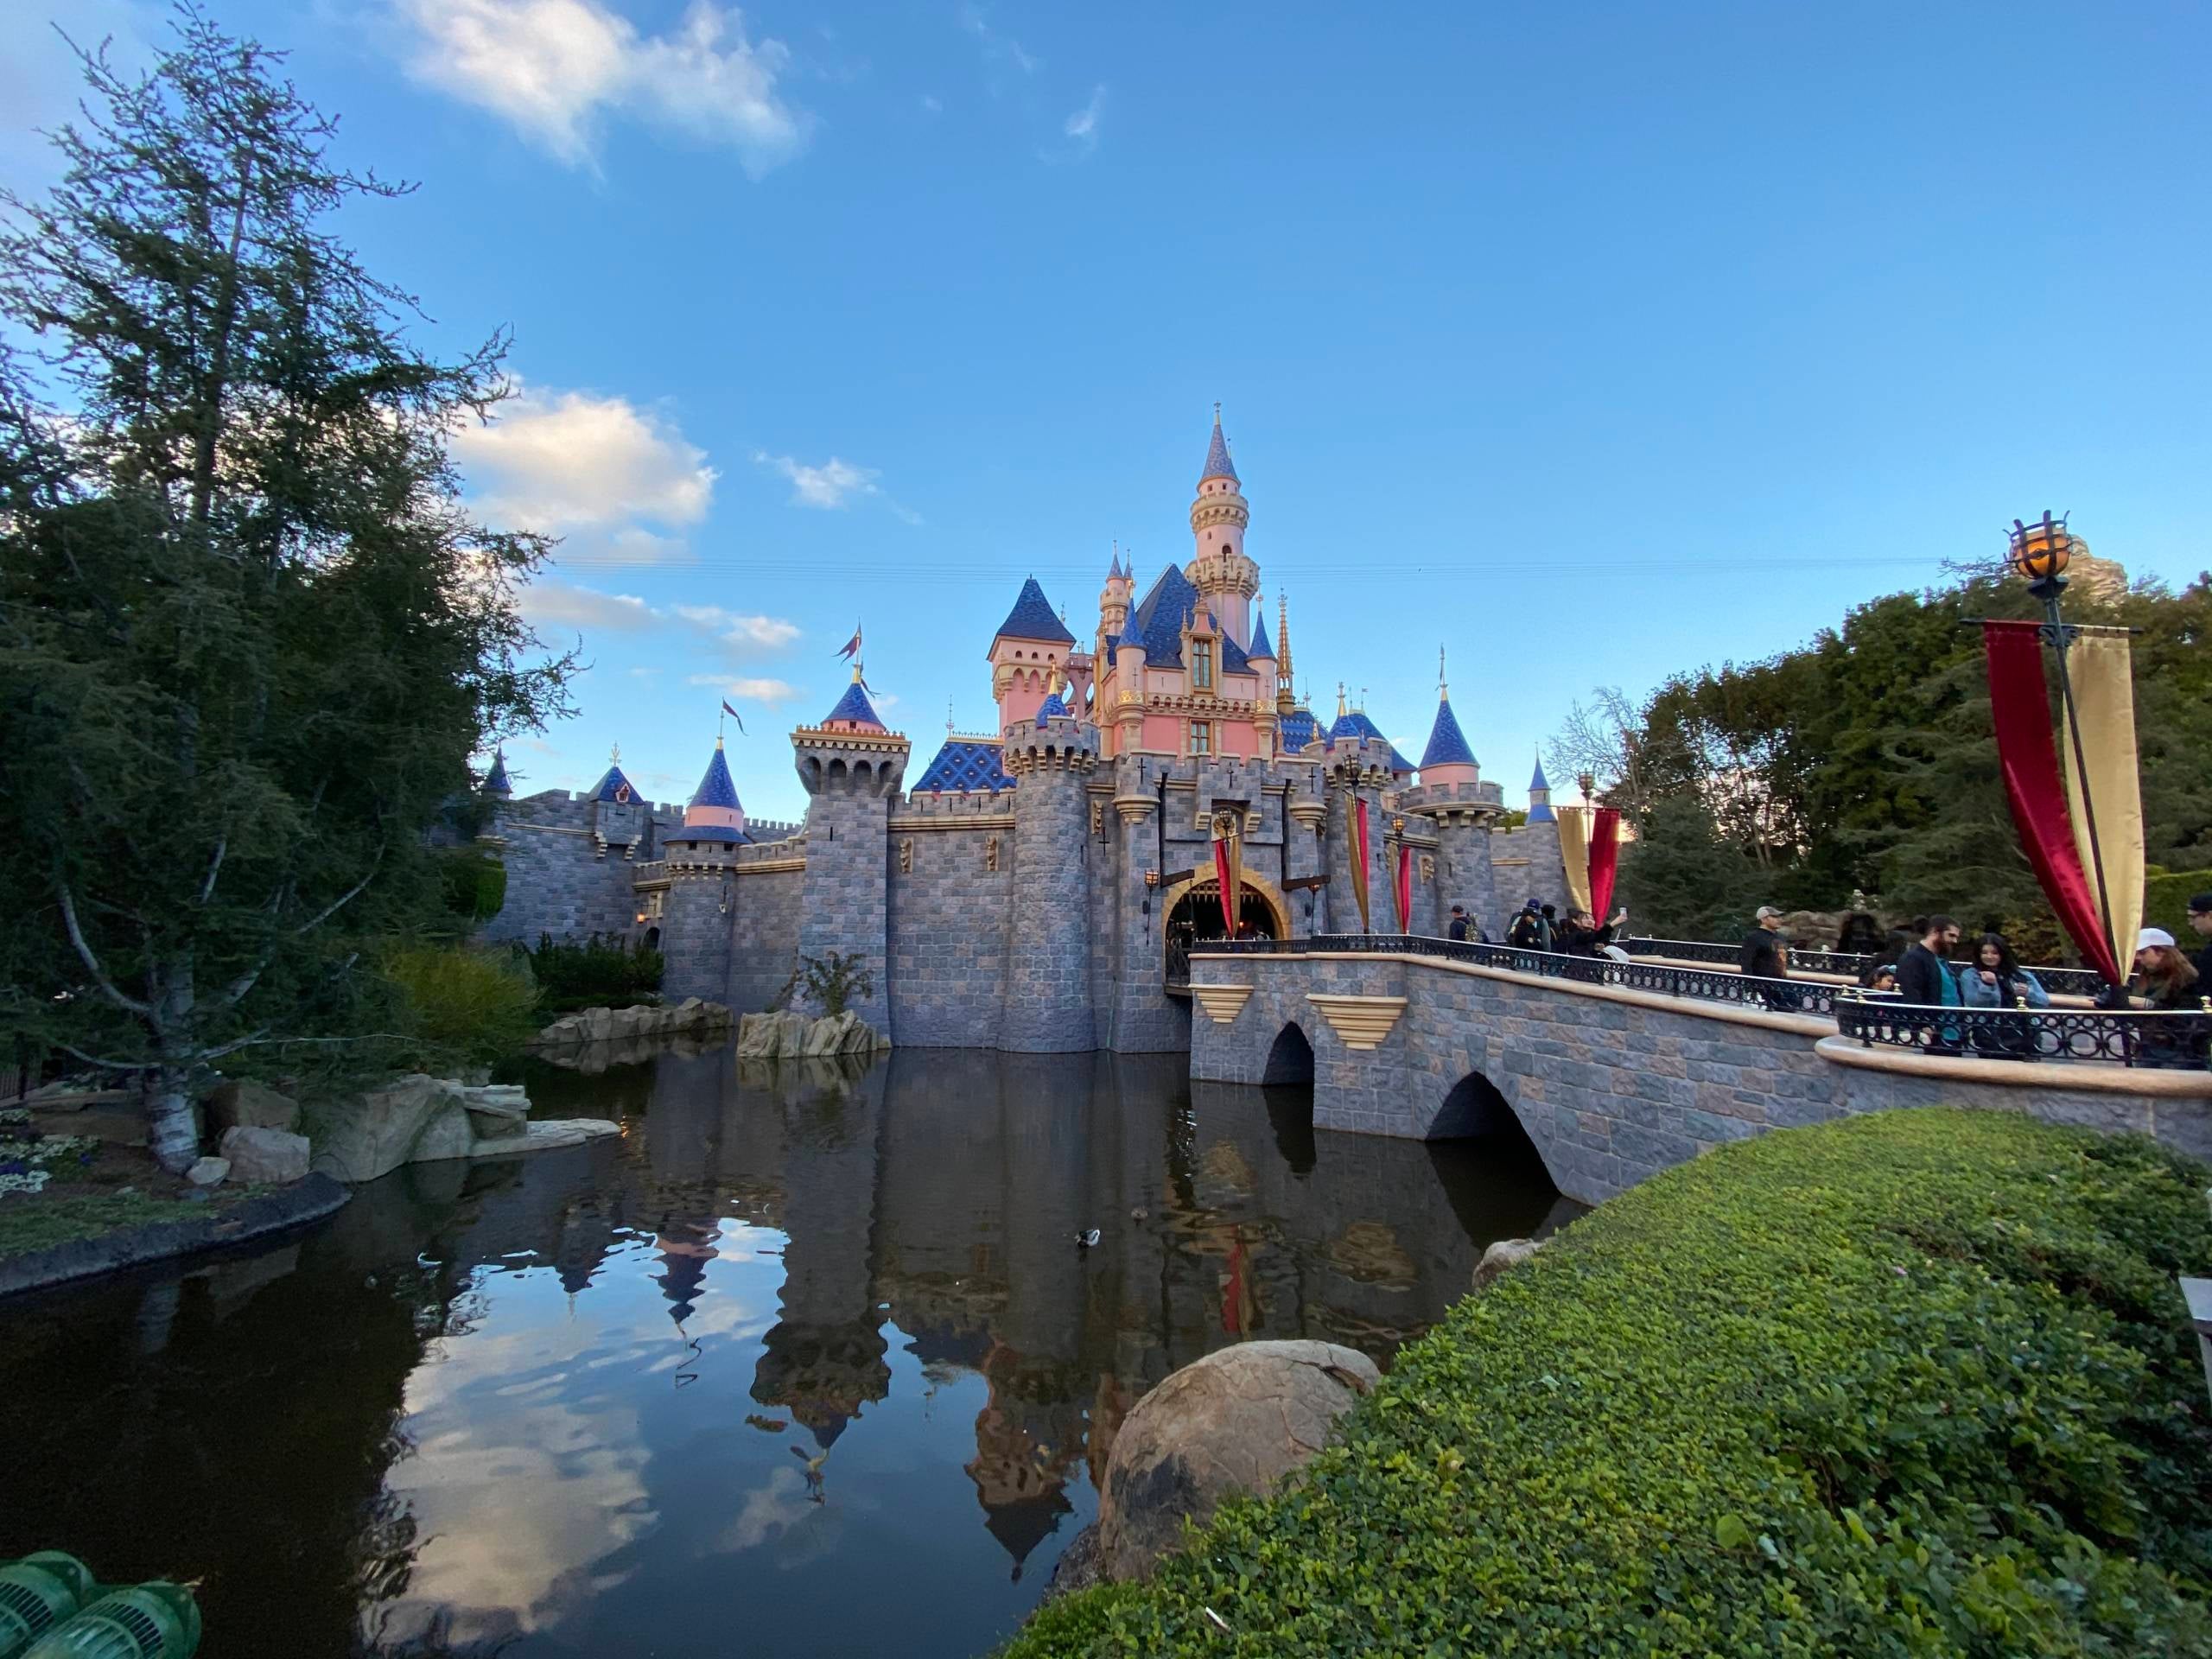 Disneyland Sleeping Beauty Castle 2020 Colors